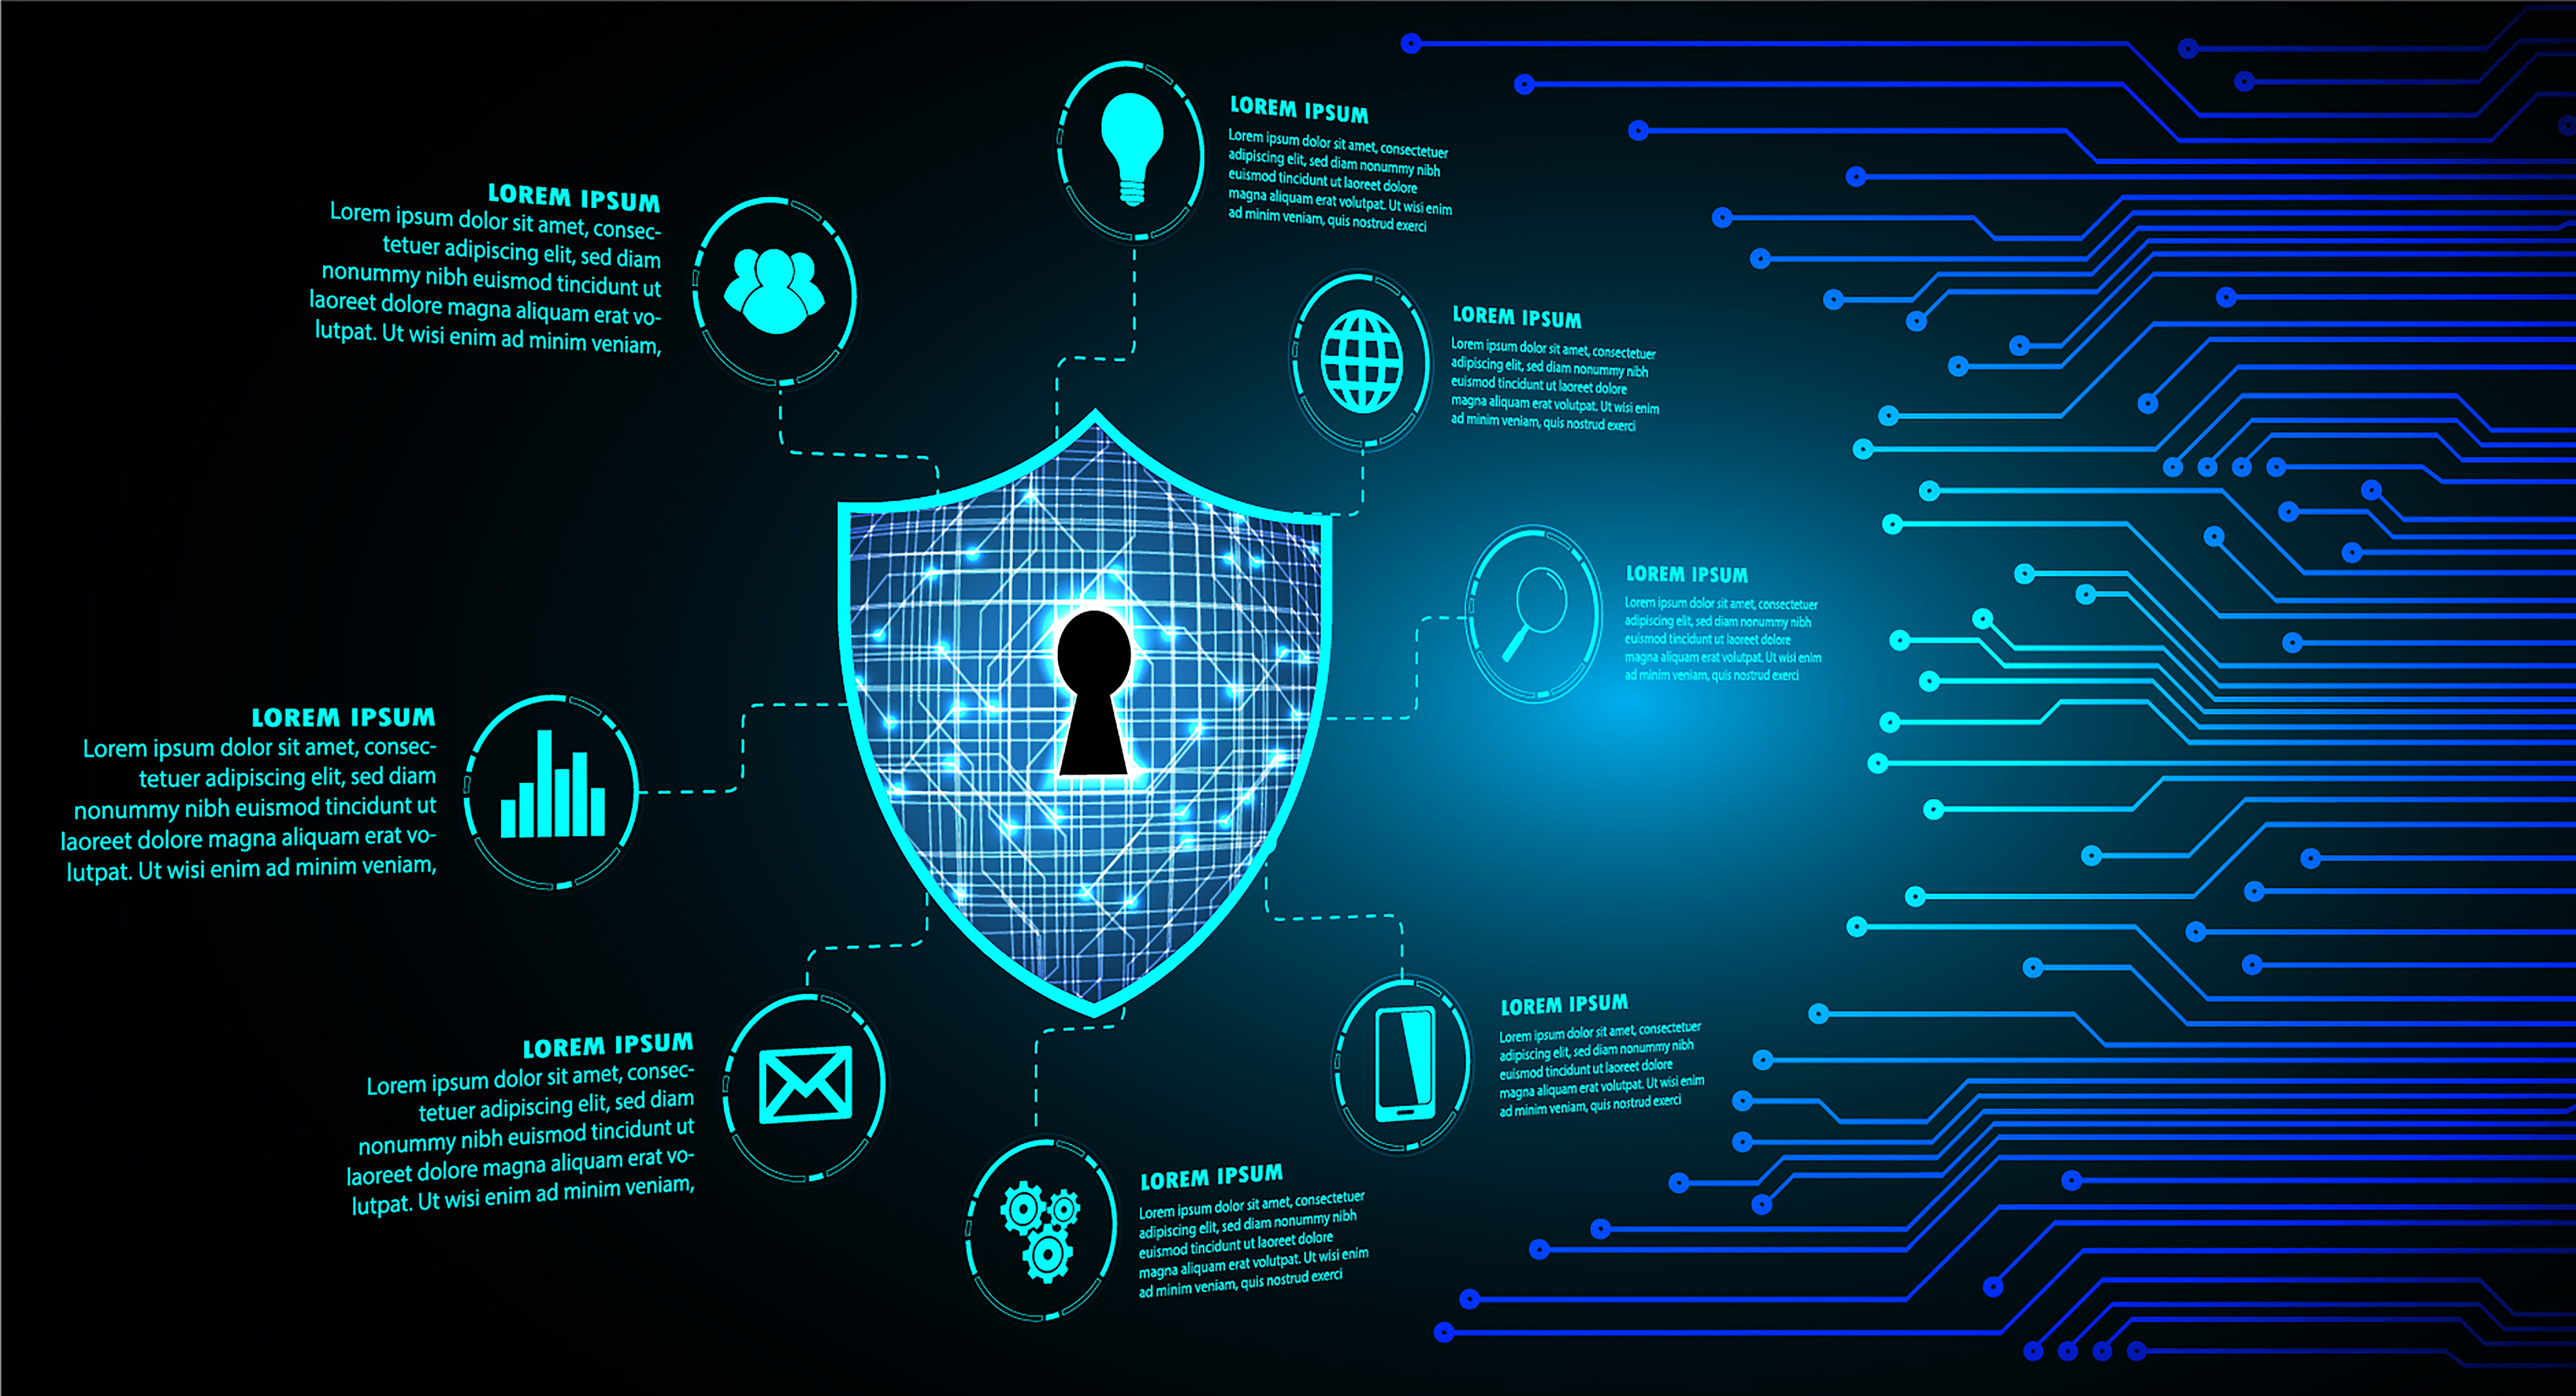 What will it look like as the U.S. Cyber Trust Mark Certification Program comes online?